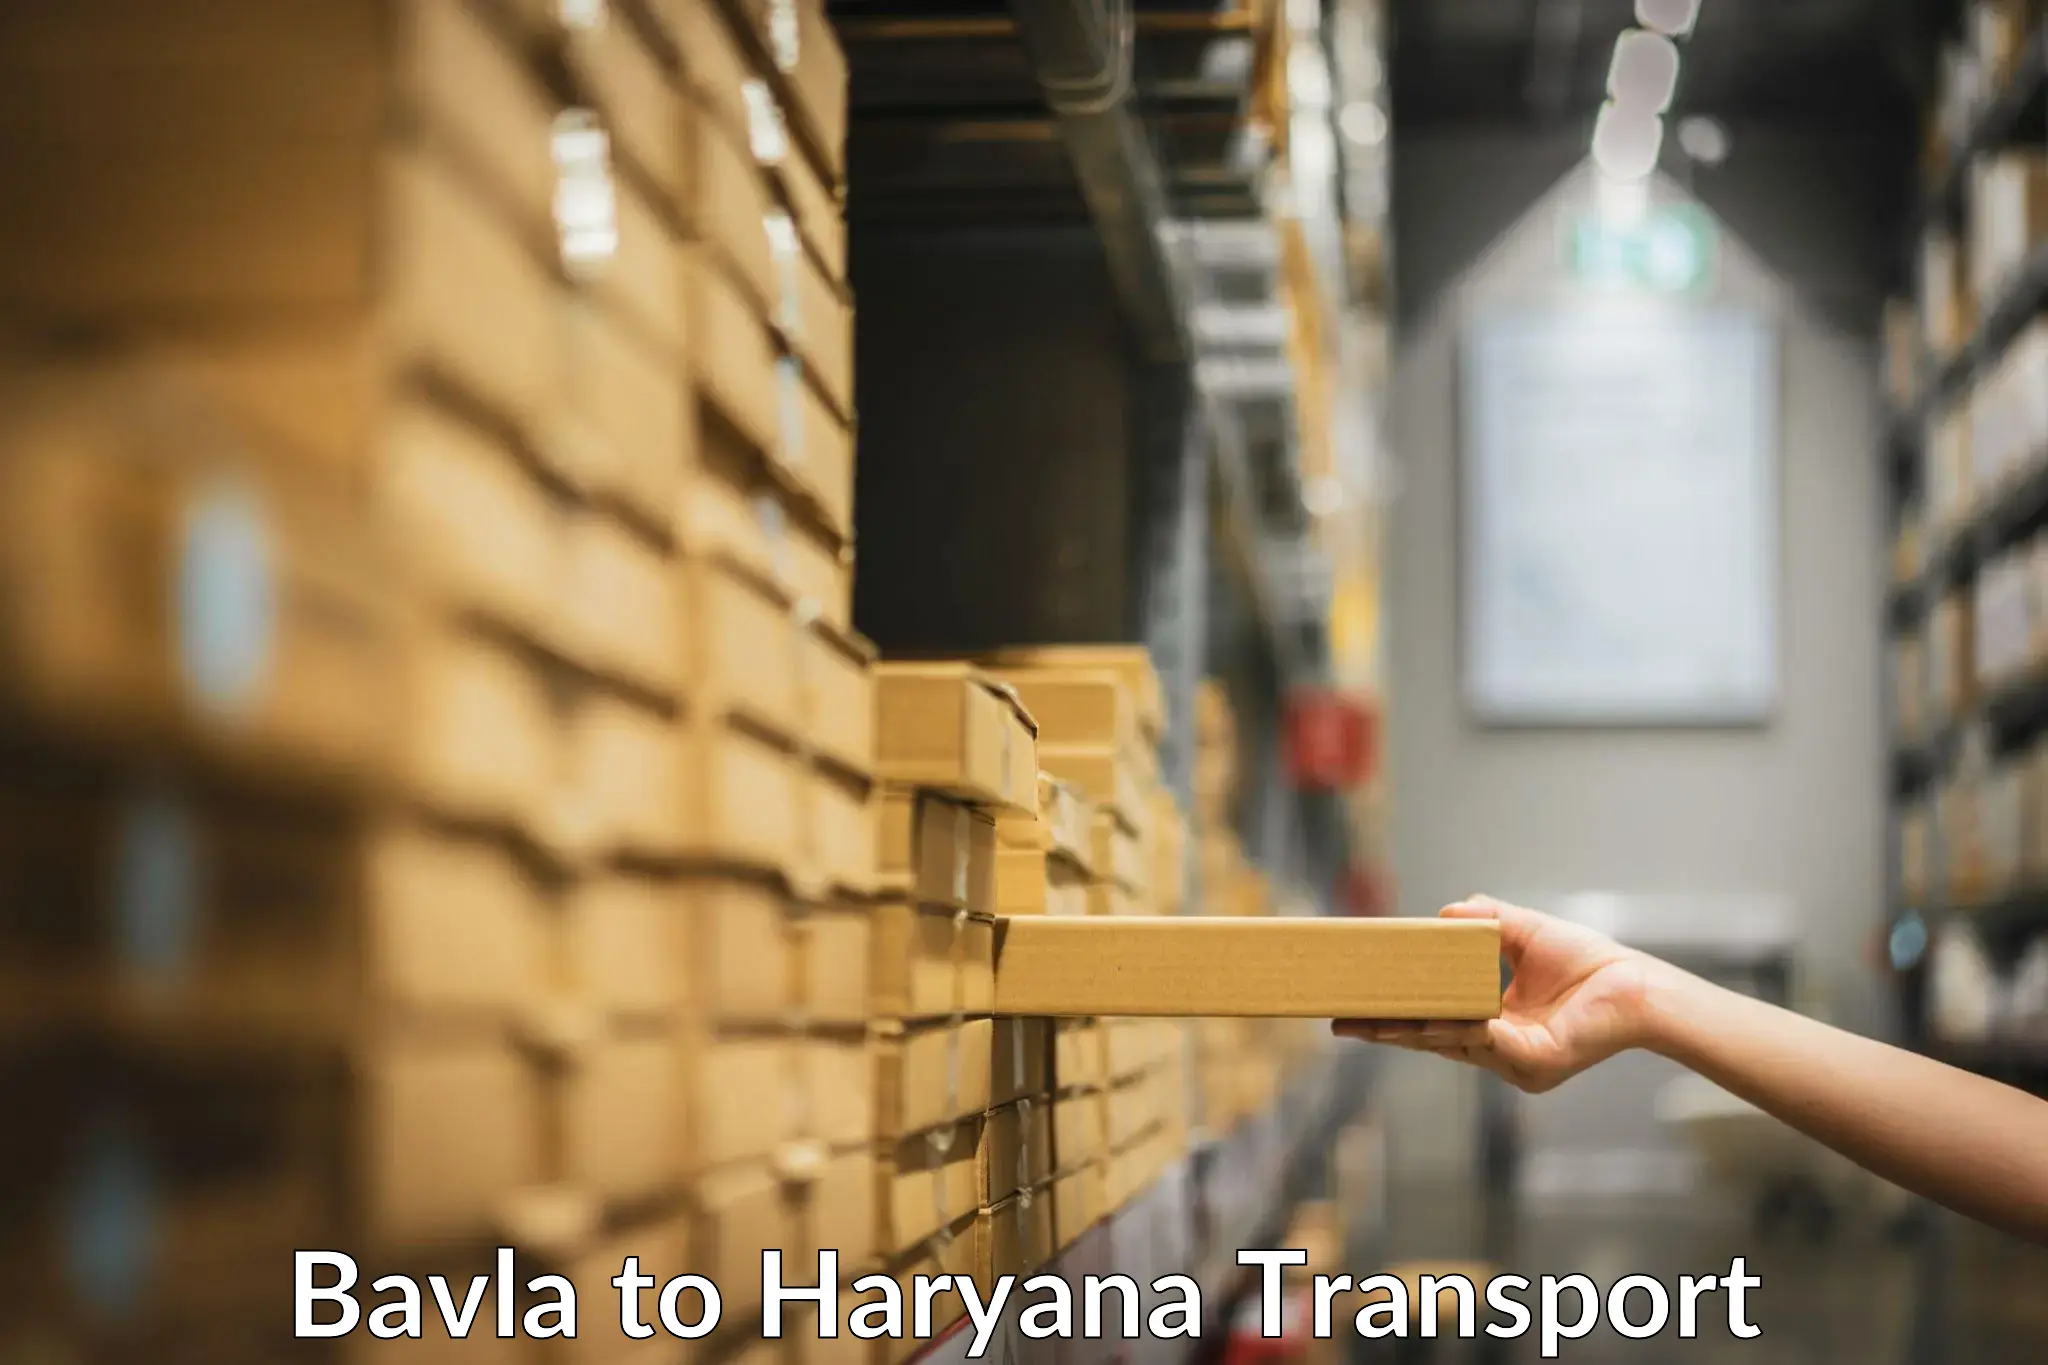 Transport in sharing Bavla to Sonipat